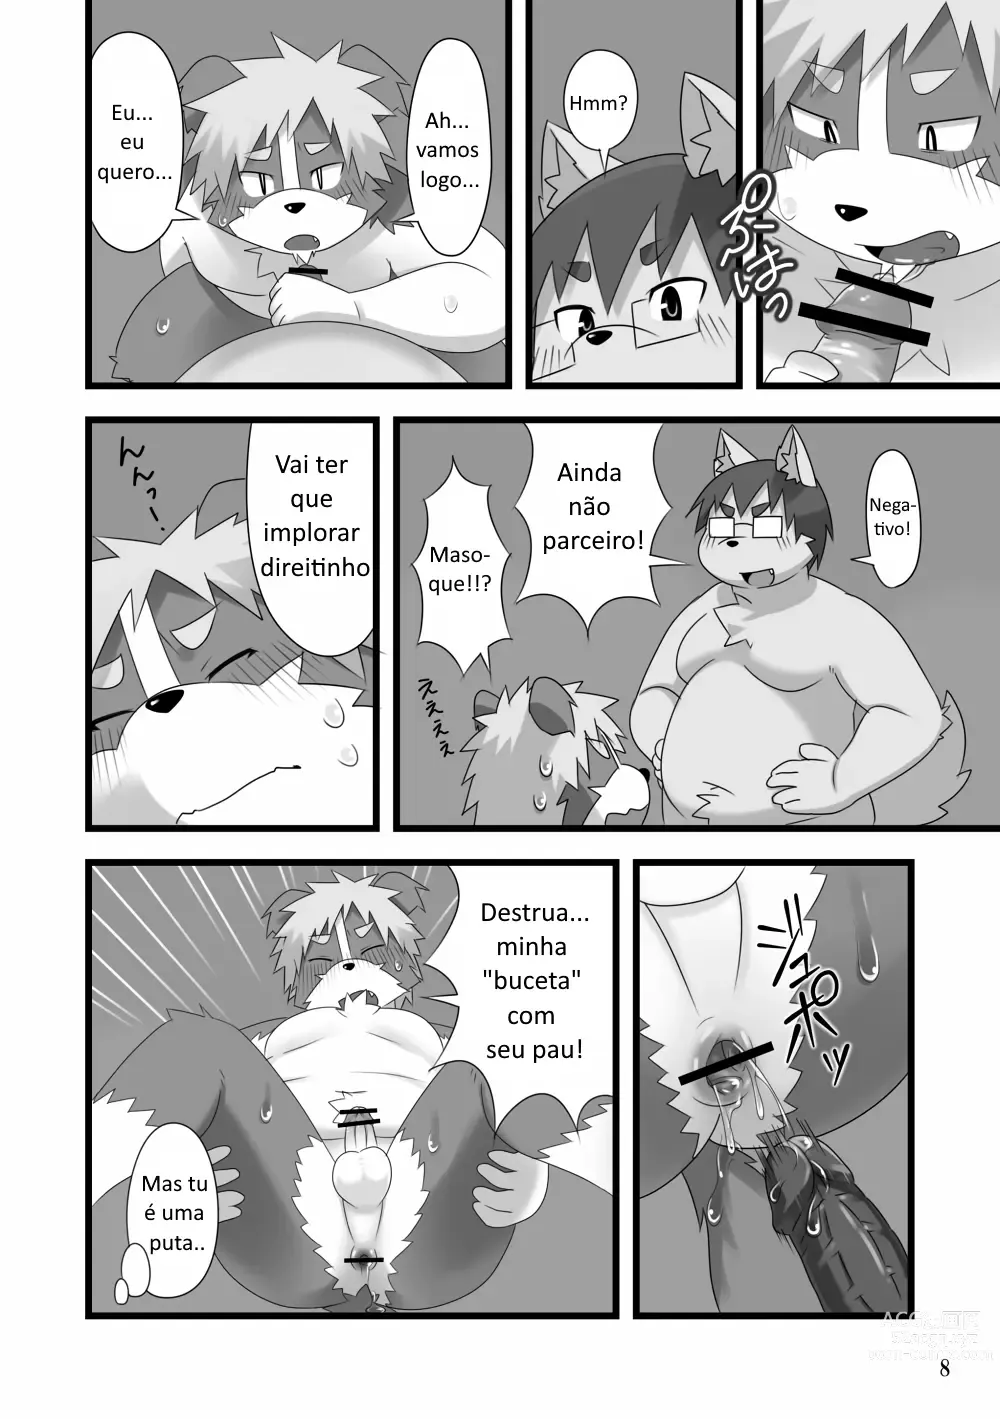 Page 9 of doujinshi Reverse Act Ato Reverso